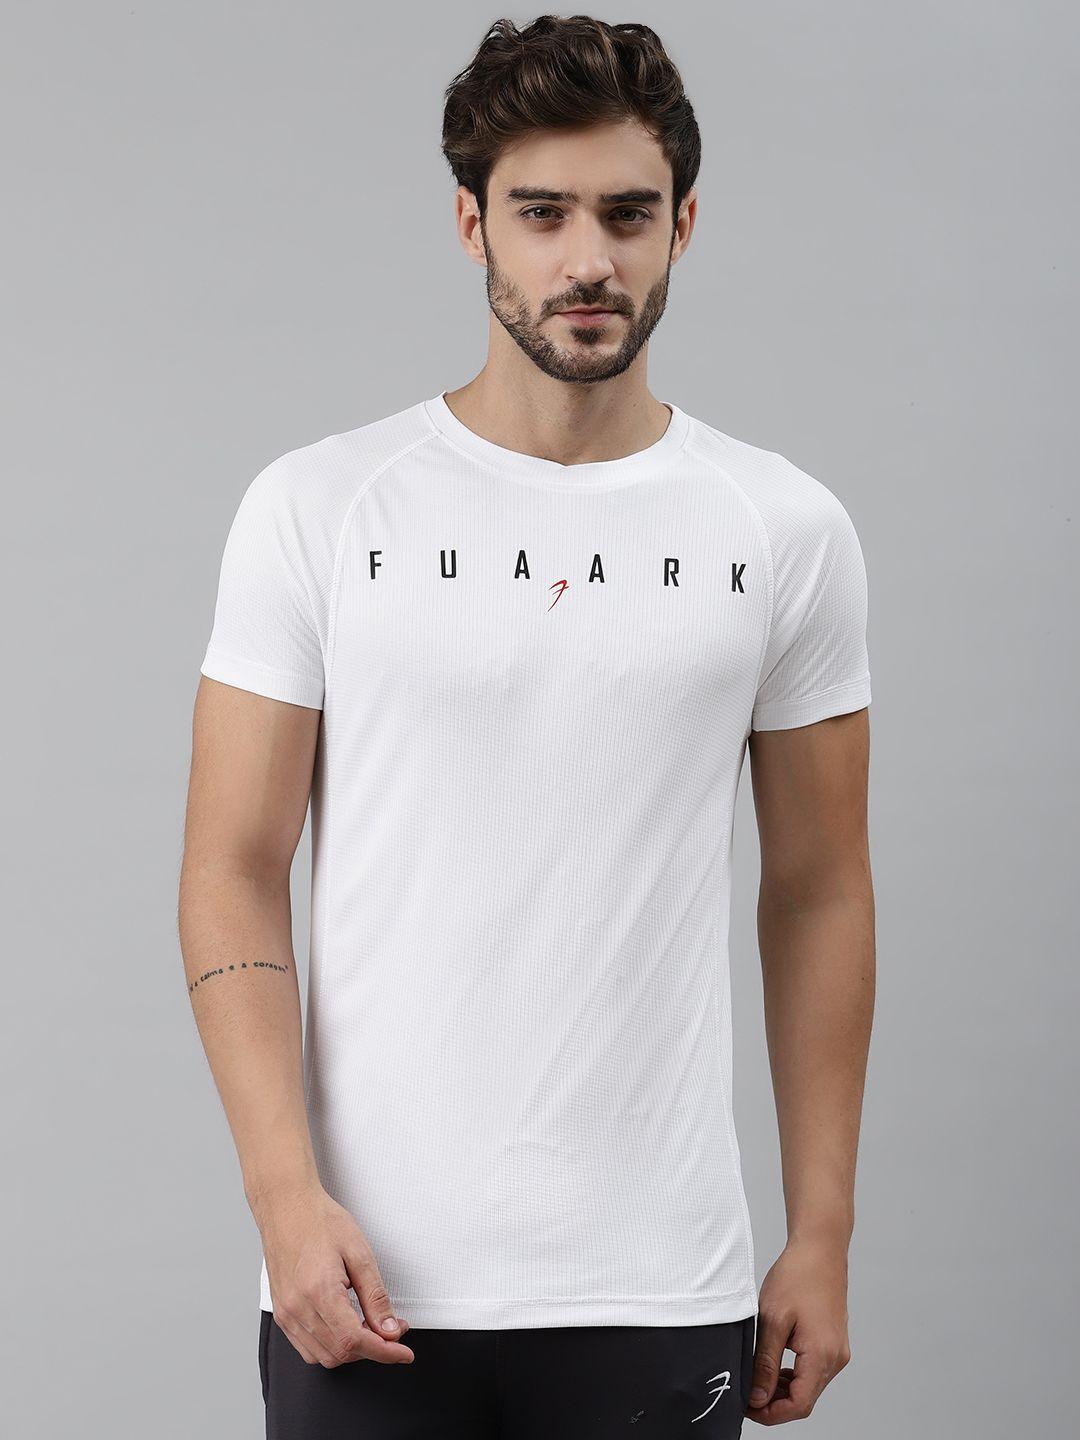 fuaark men white & black brand logo print slim fit round neck t-shirt